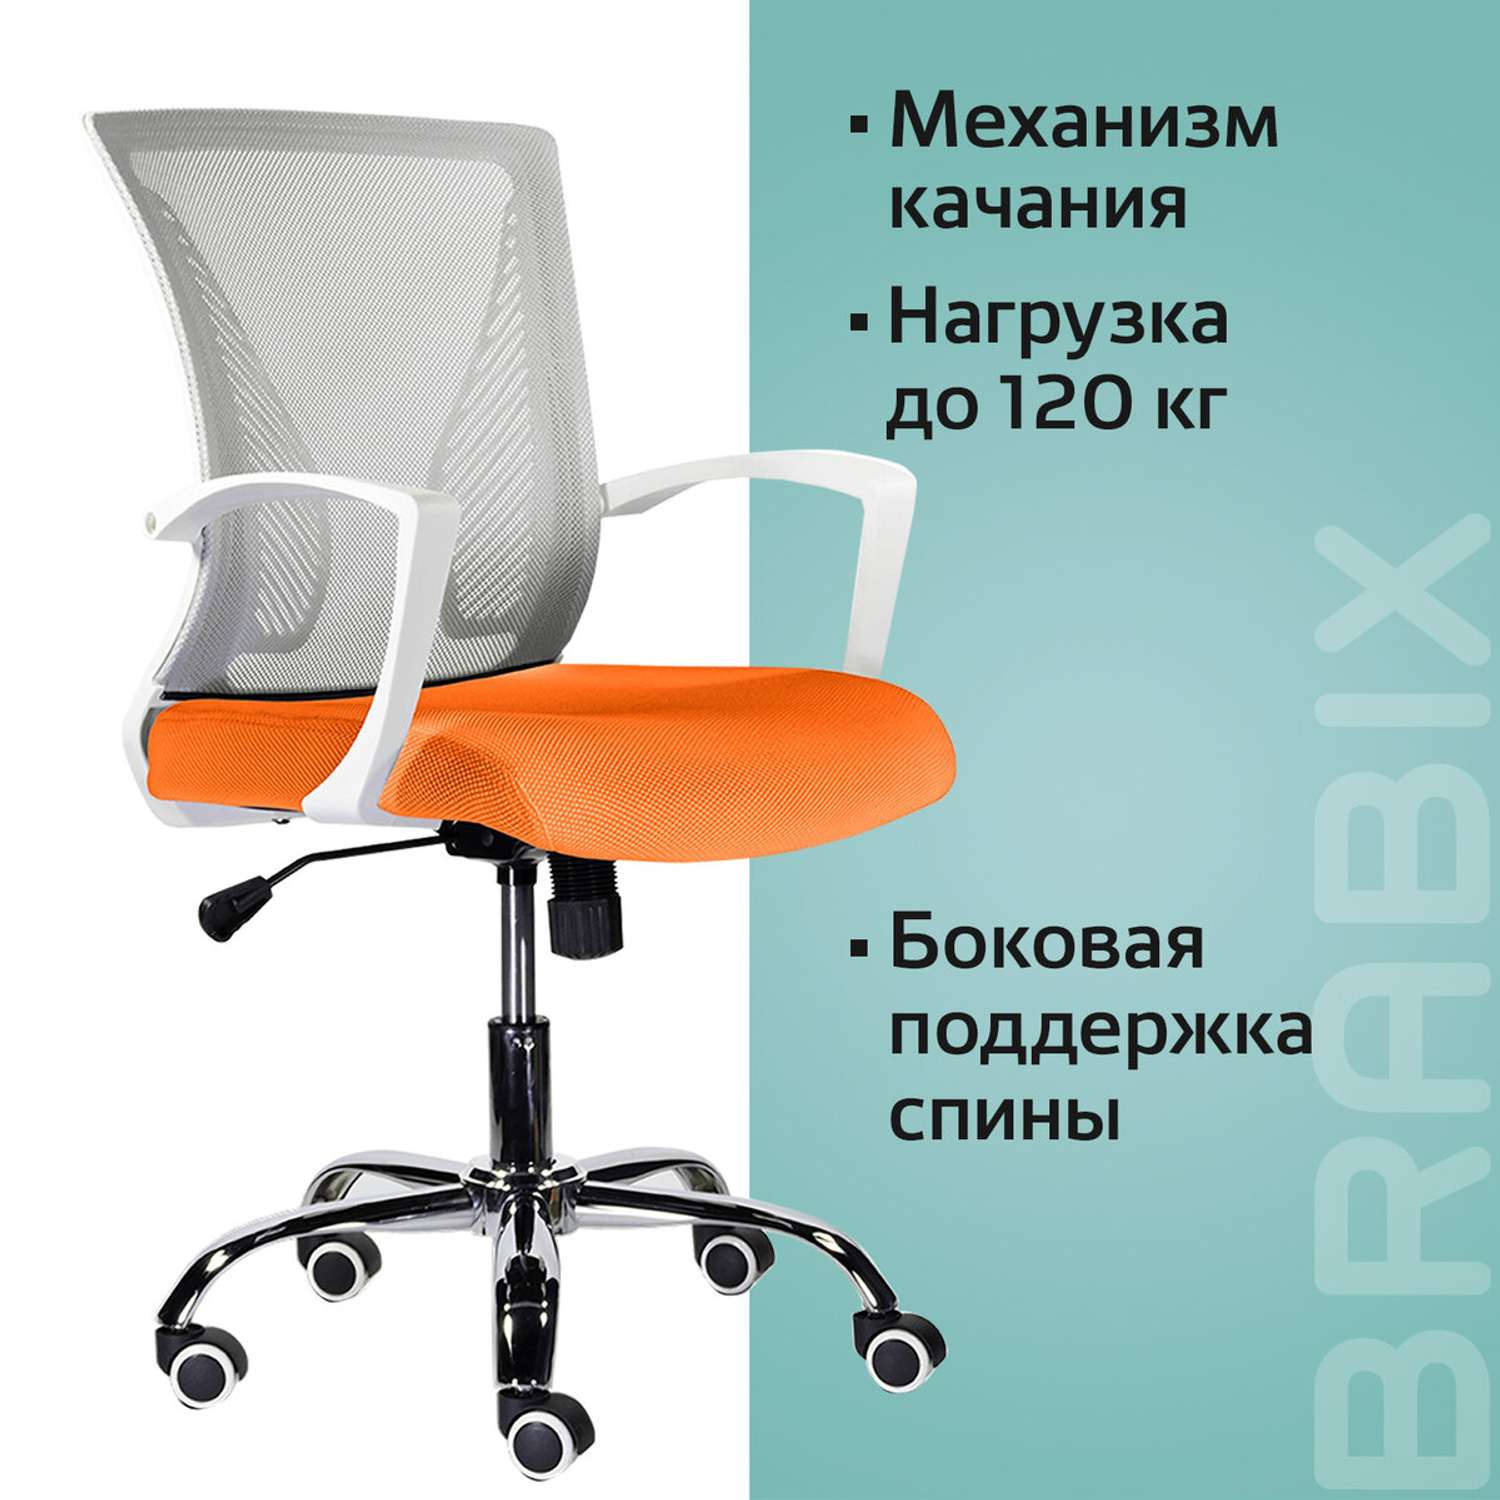 Кресло компьютерное Brabix Wings MG-306 хром сетка cерое/оранжевое E-105 - фото 1